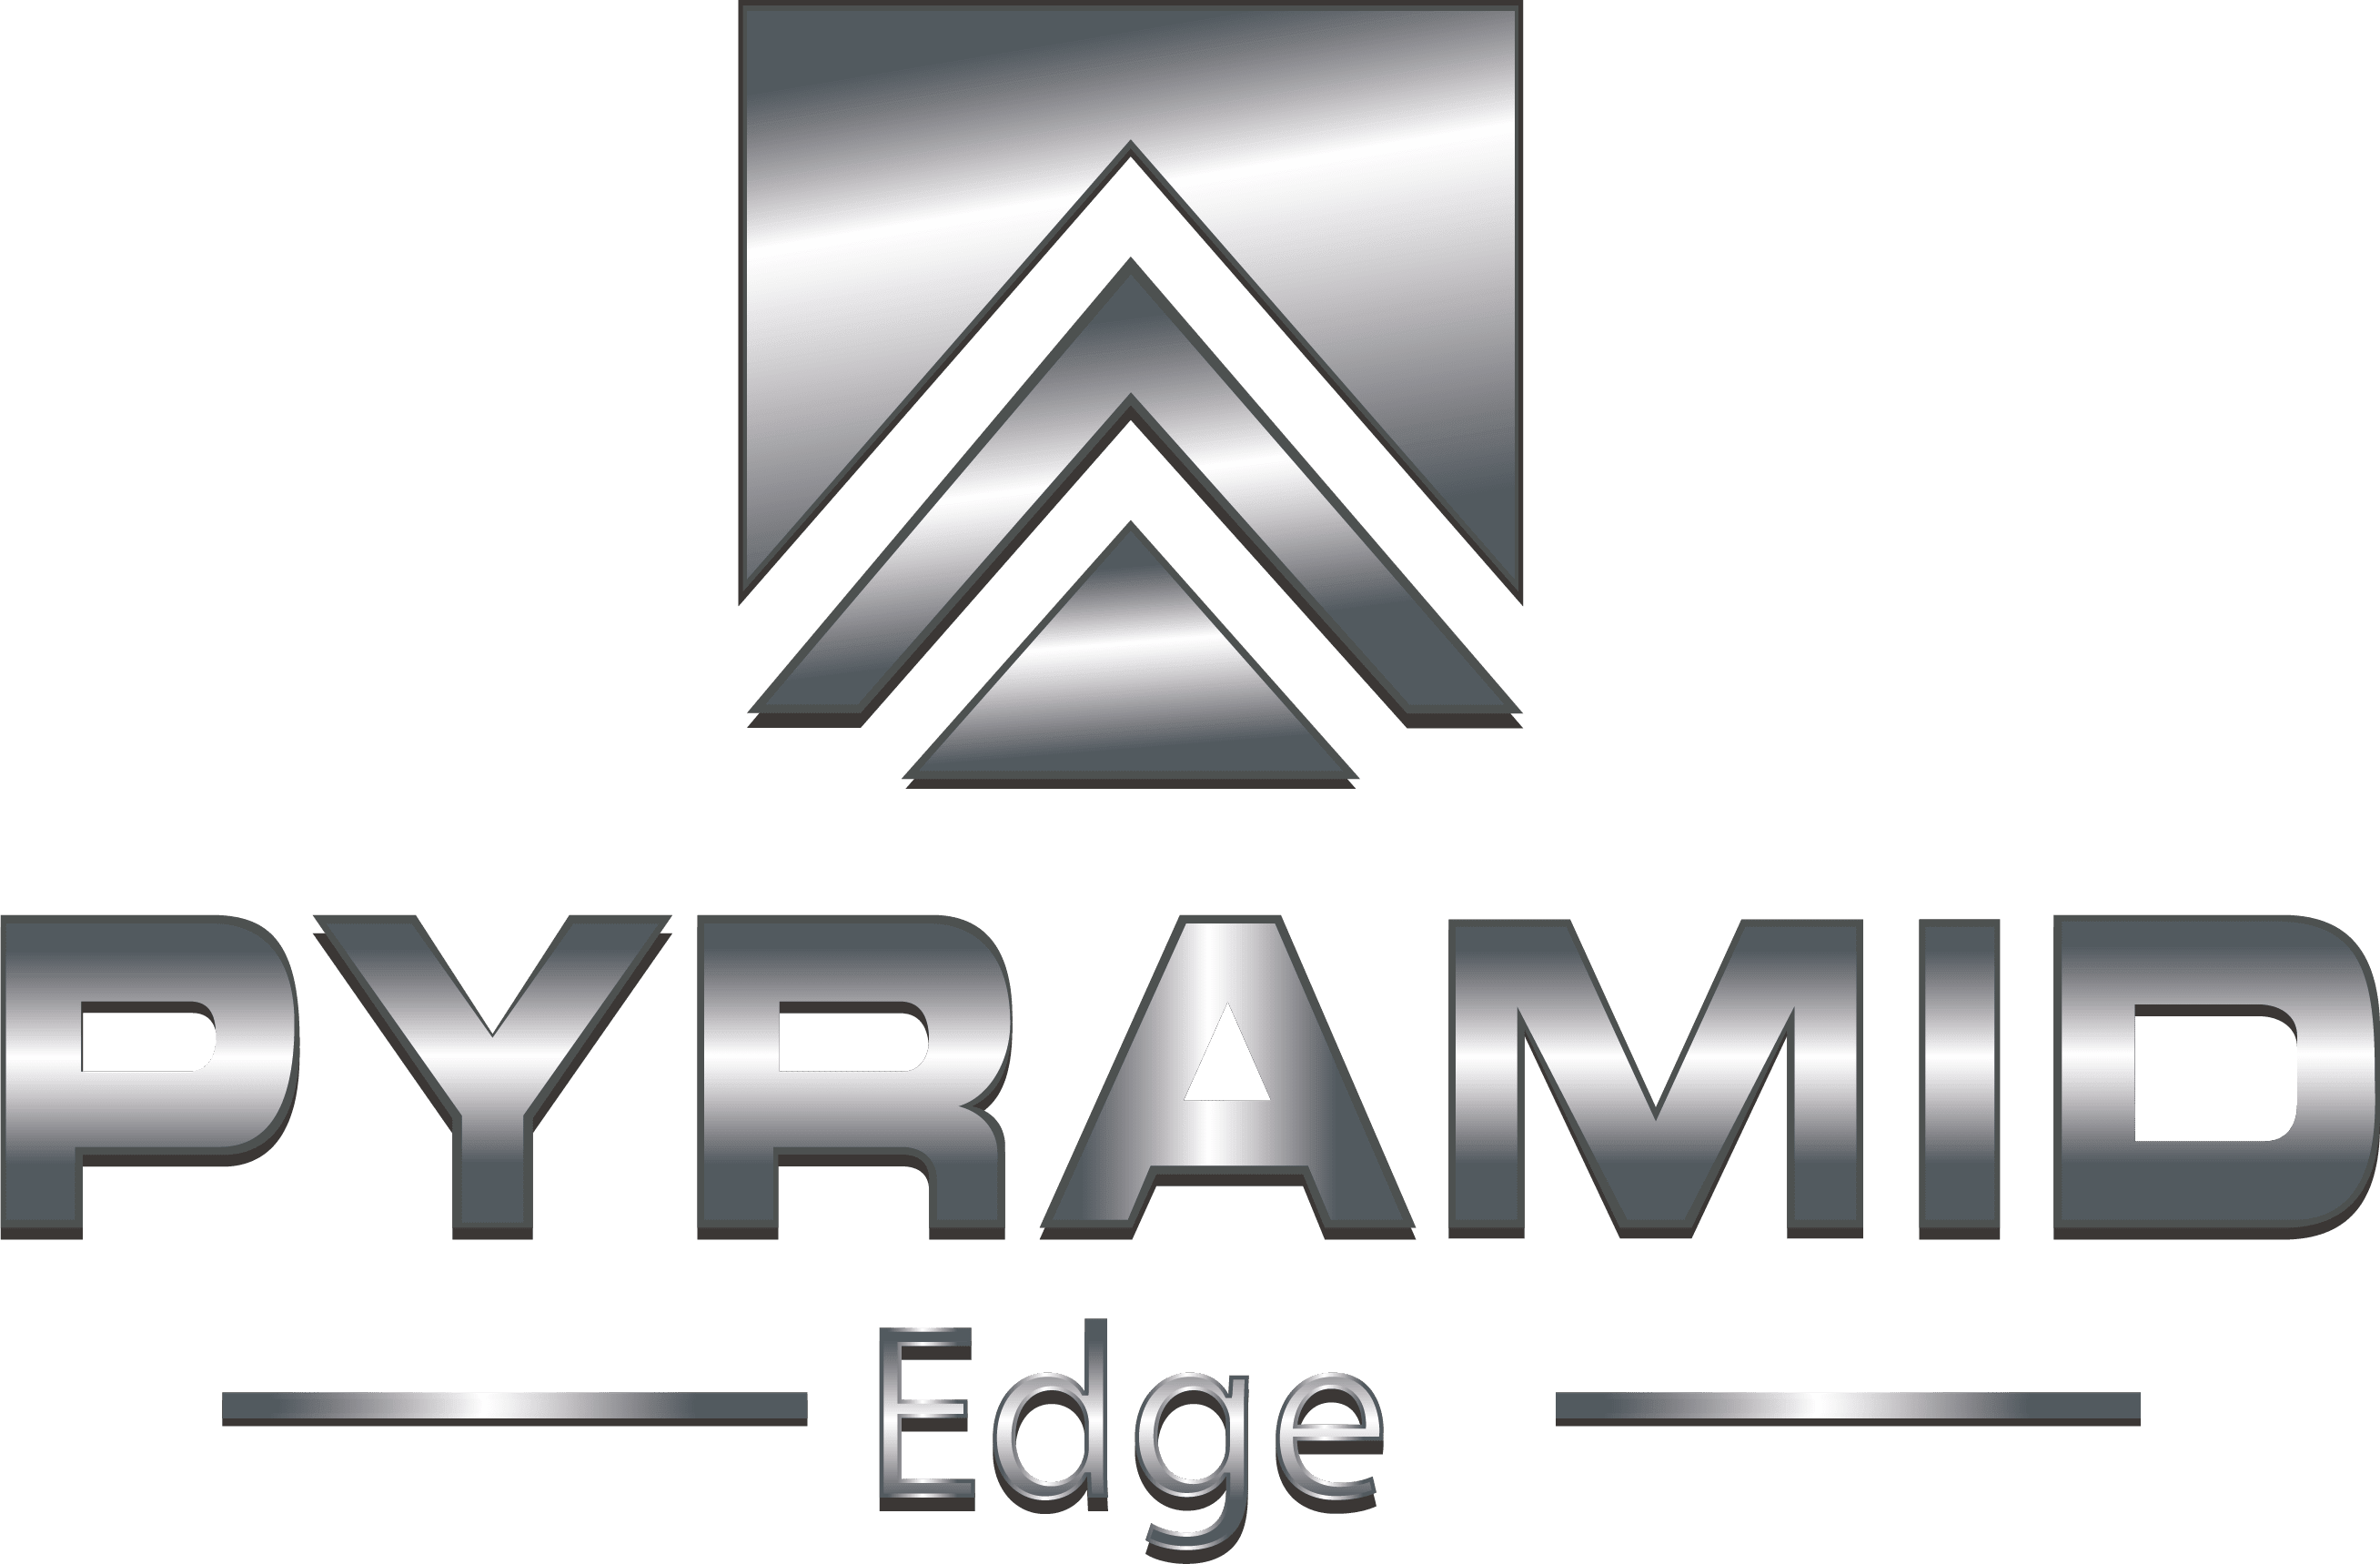 PyramidEdge Consulting